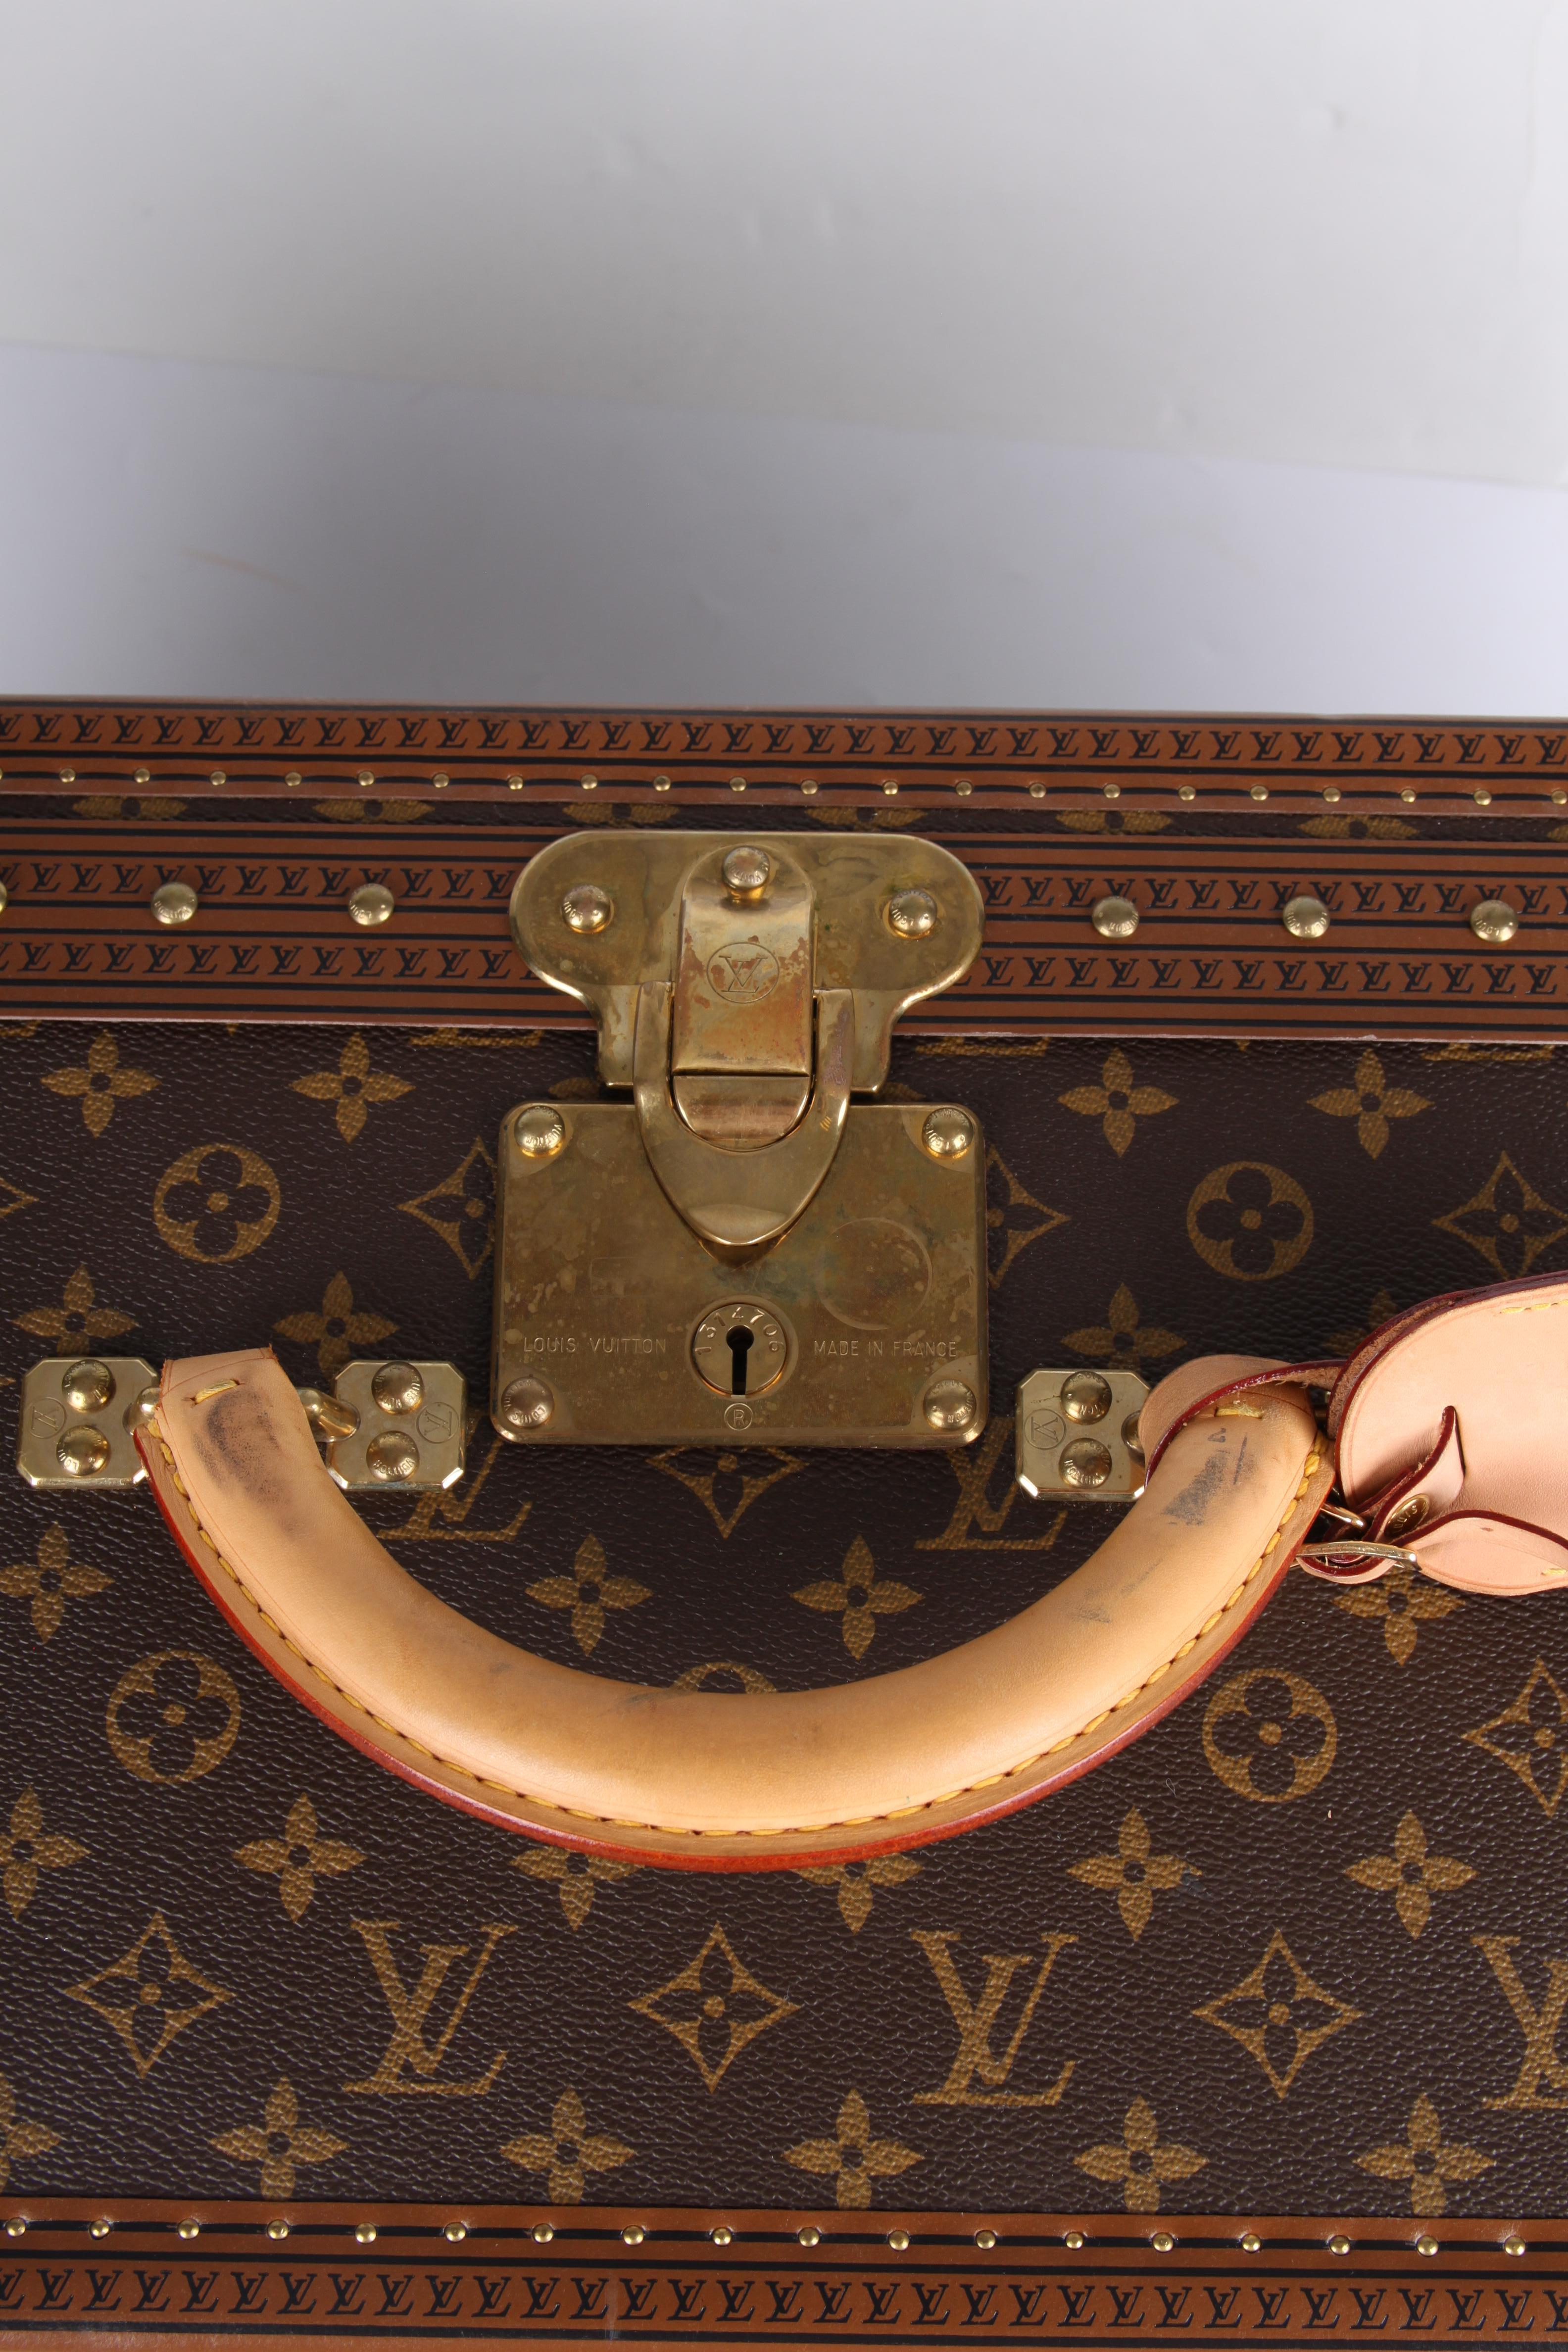   Louis Vuitton Monogram Trunk Suitcase - brown   Louis Vuitton Monogram Trunk S 2